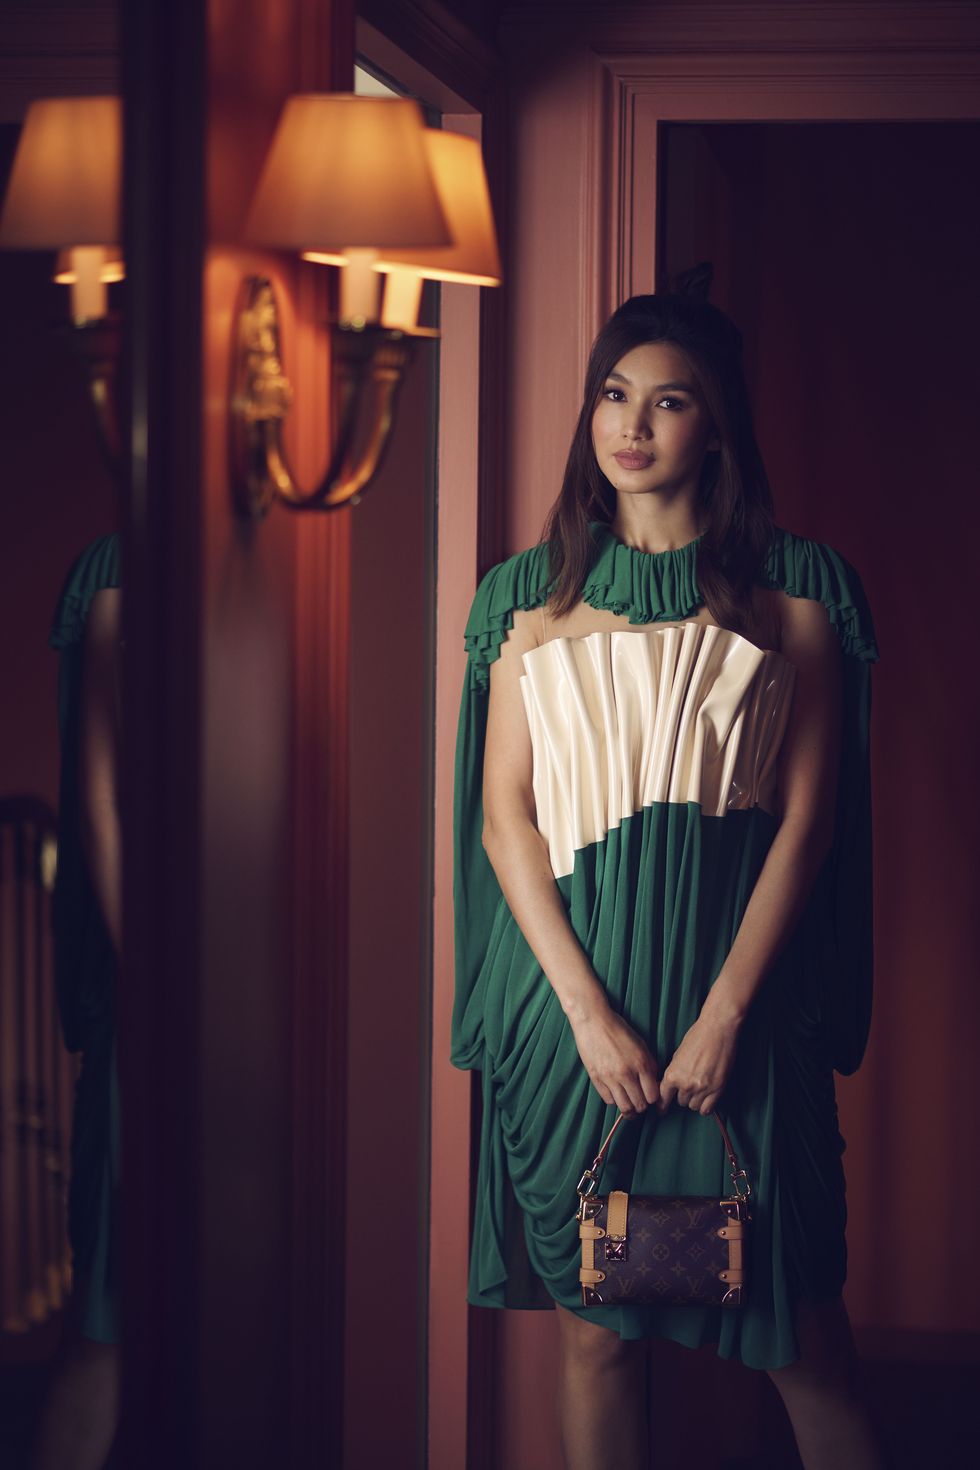 Gemma Chan attends Louis Vuitton Paris Fashion Week show